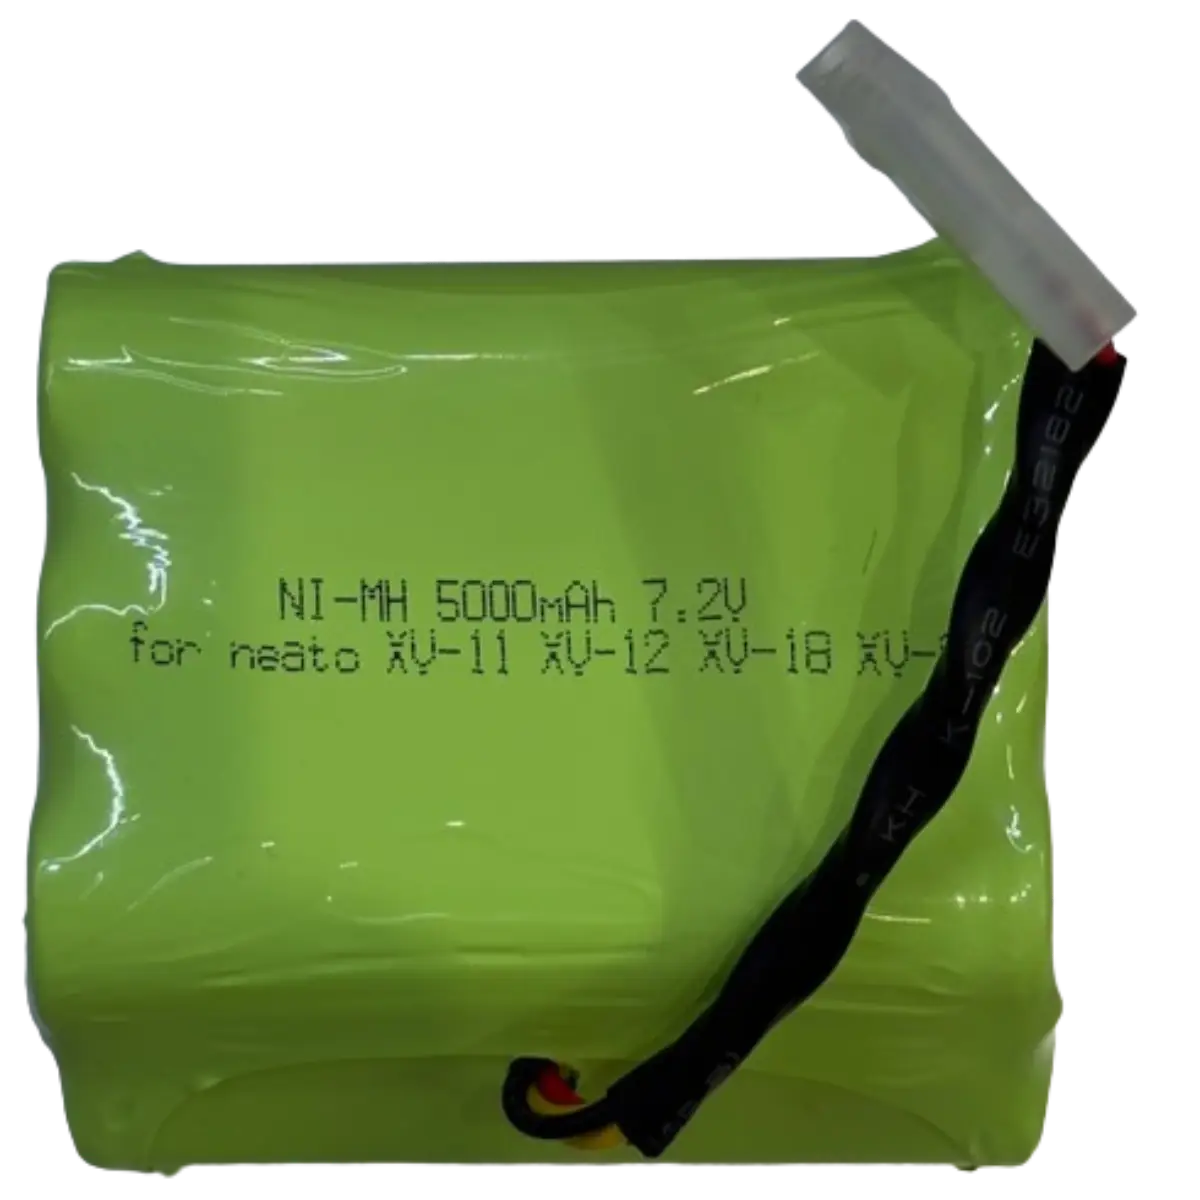 Batterie 7.2V 5000mAh pour aspirateur Nateo XV-11, XV-12, XV-14, XV-15, XV-18, XV-21